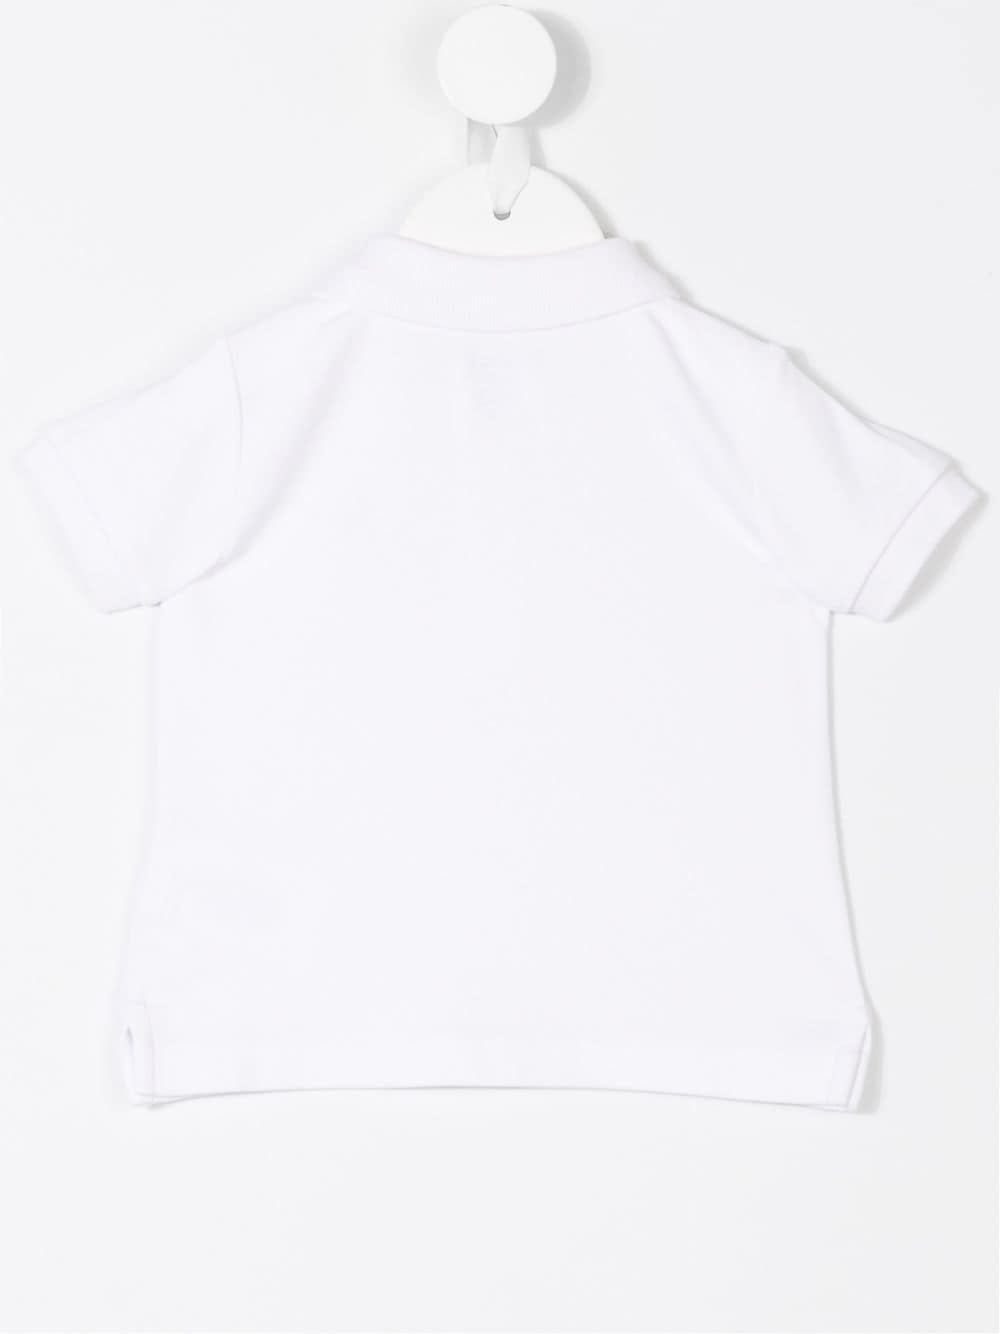 White polo shirt for newborns with logo